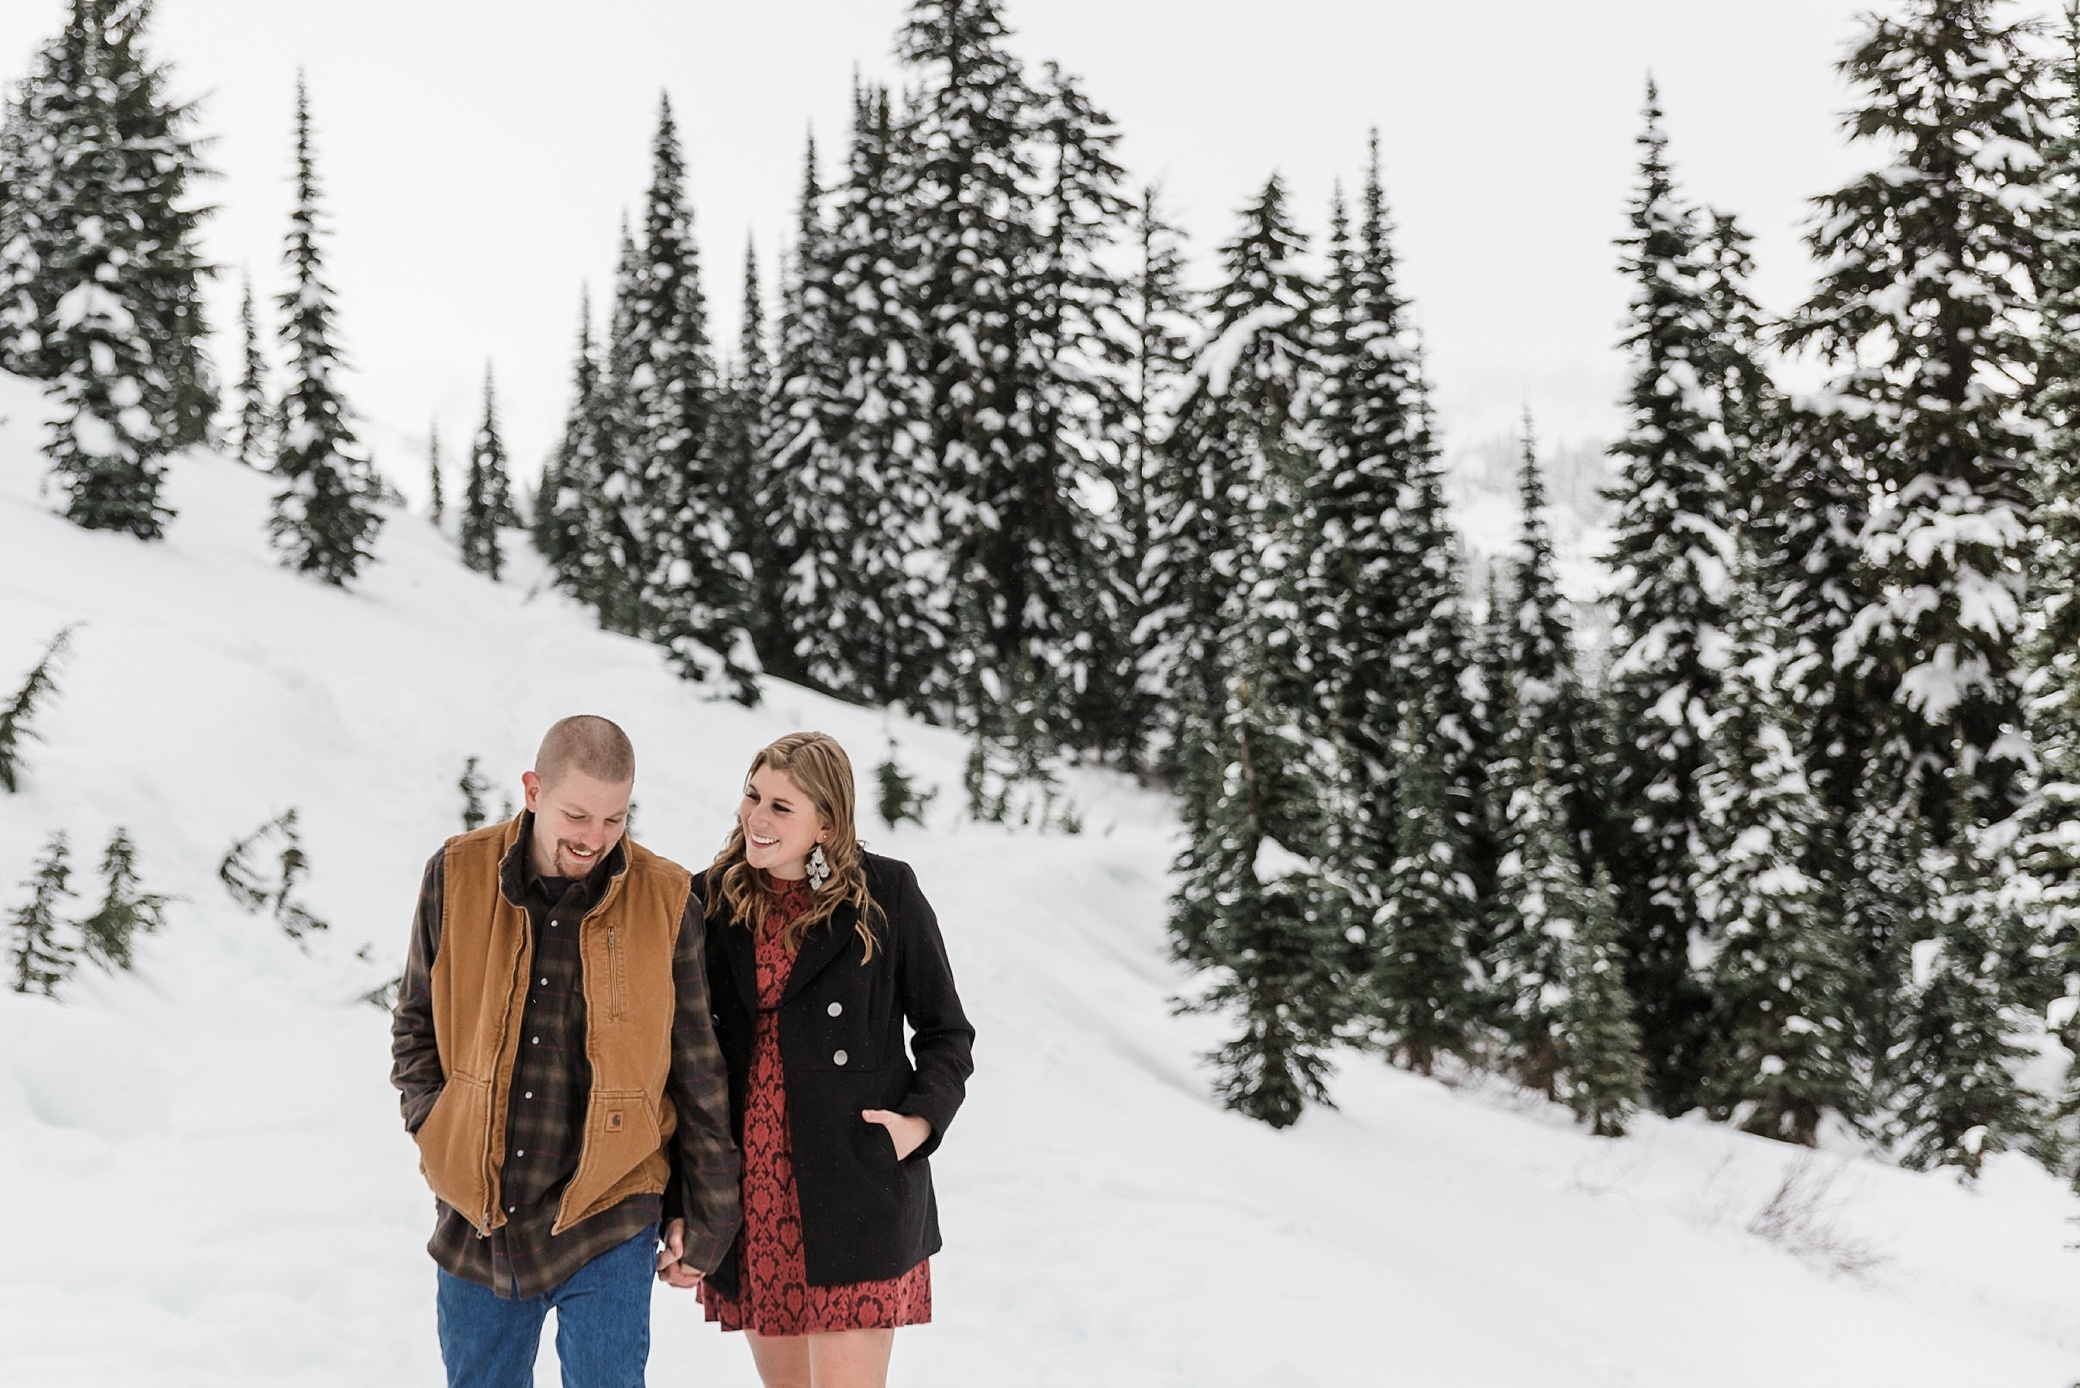 Couples Photoshoot in the Snow | Megan Montalvo Photography